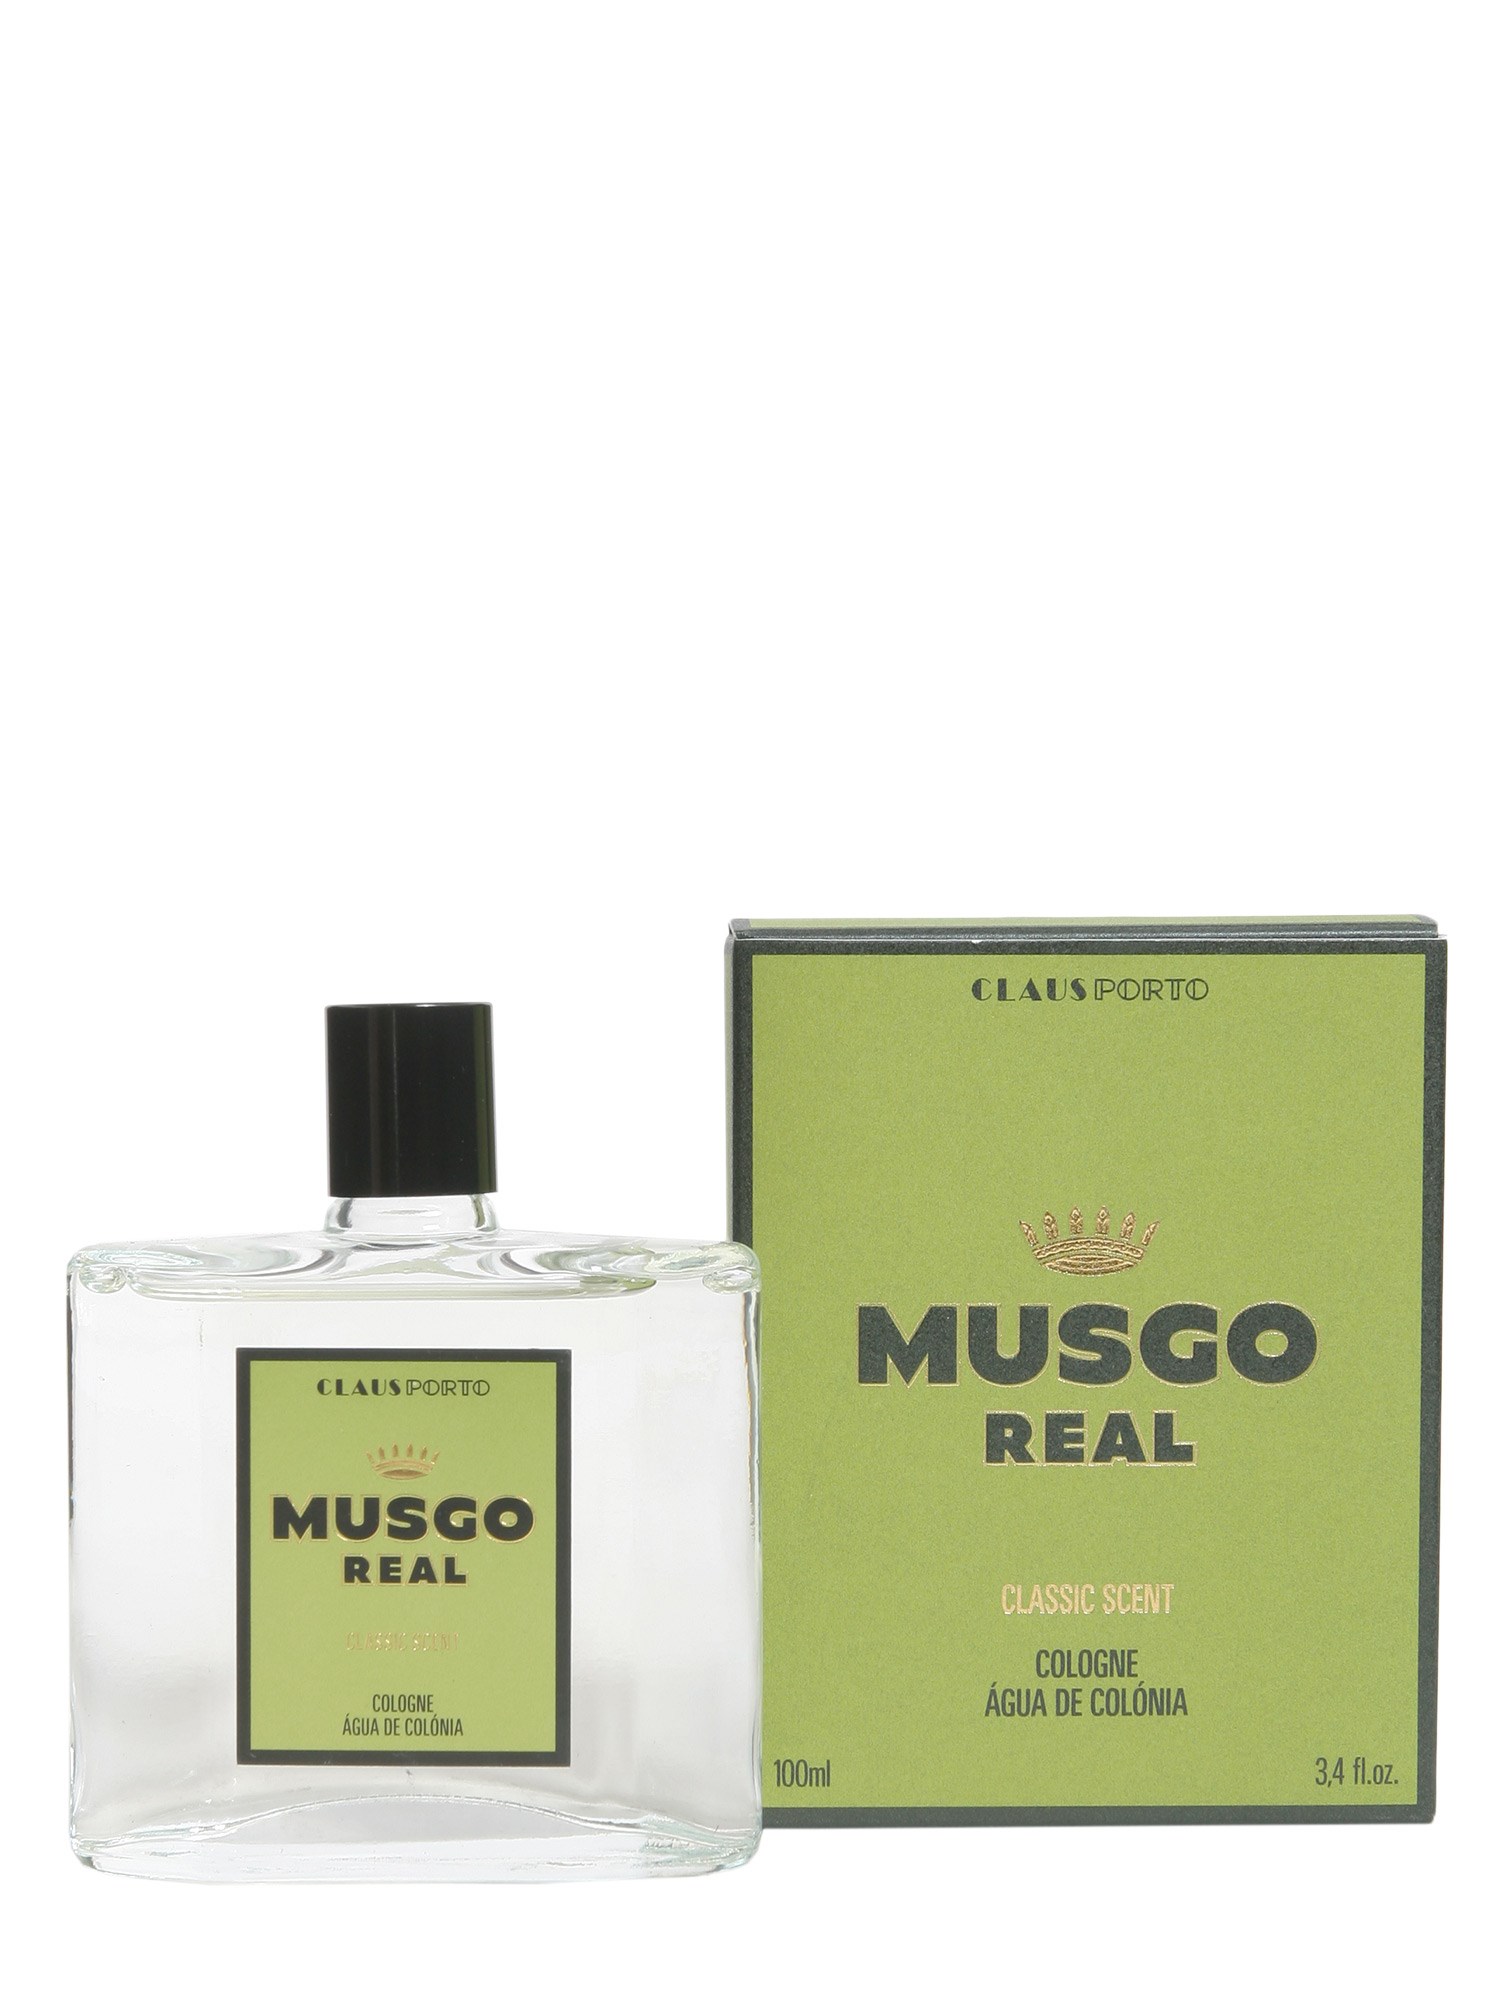 musgo real classic scent splash & spray cologne